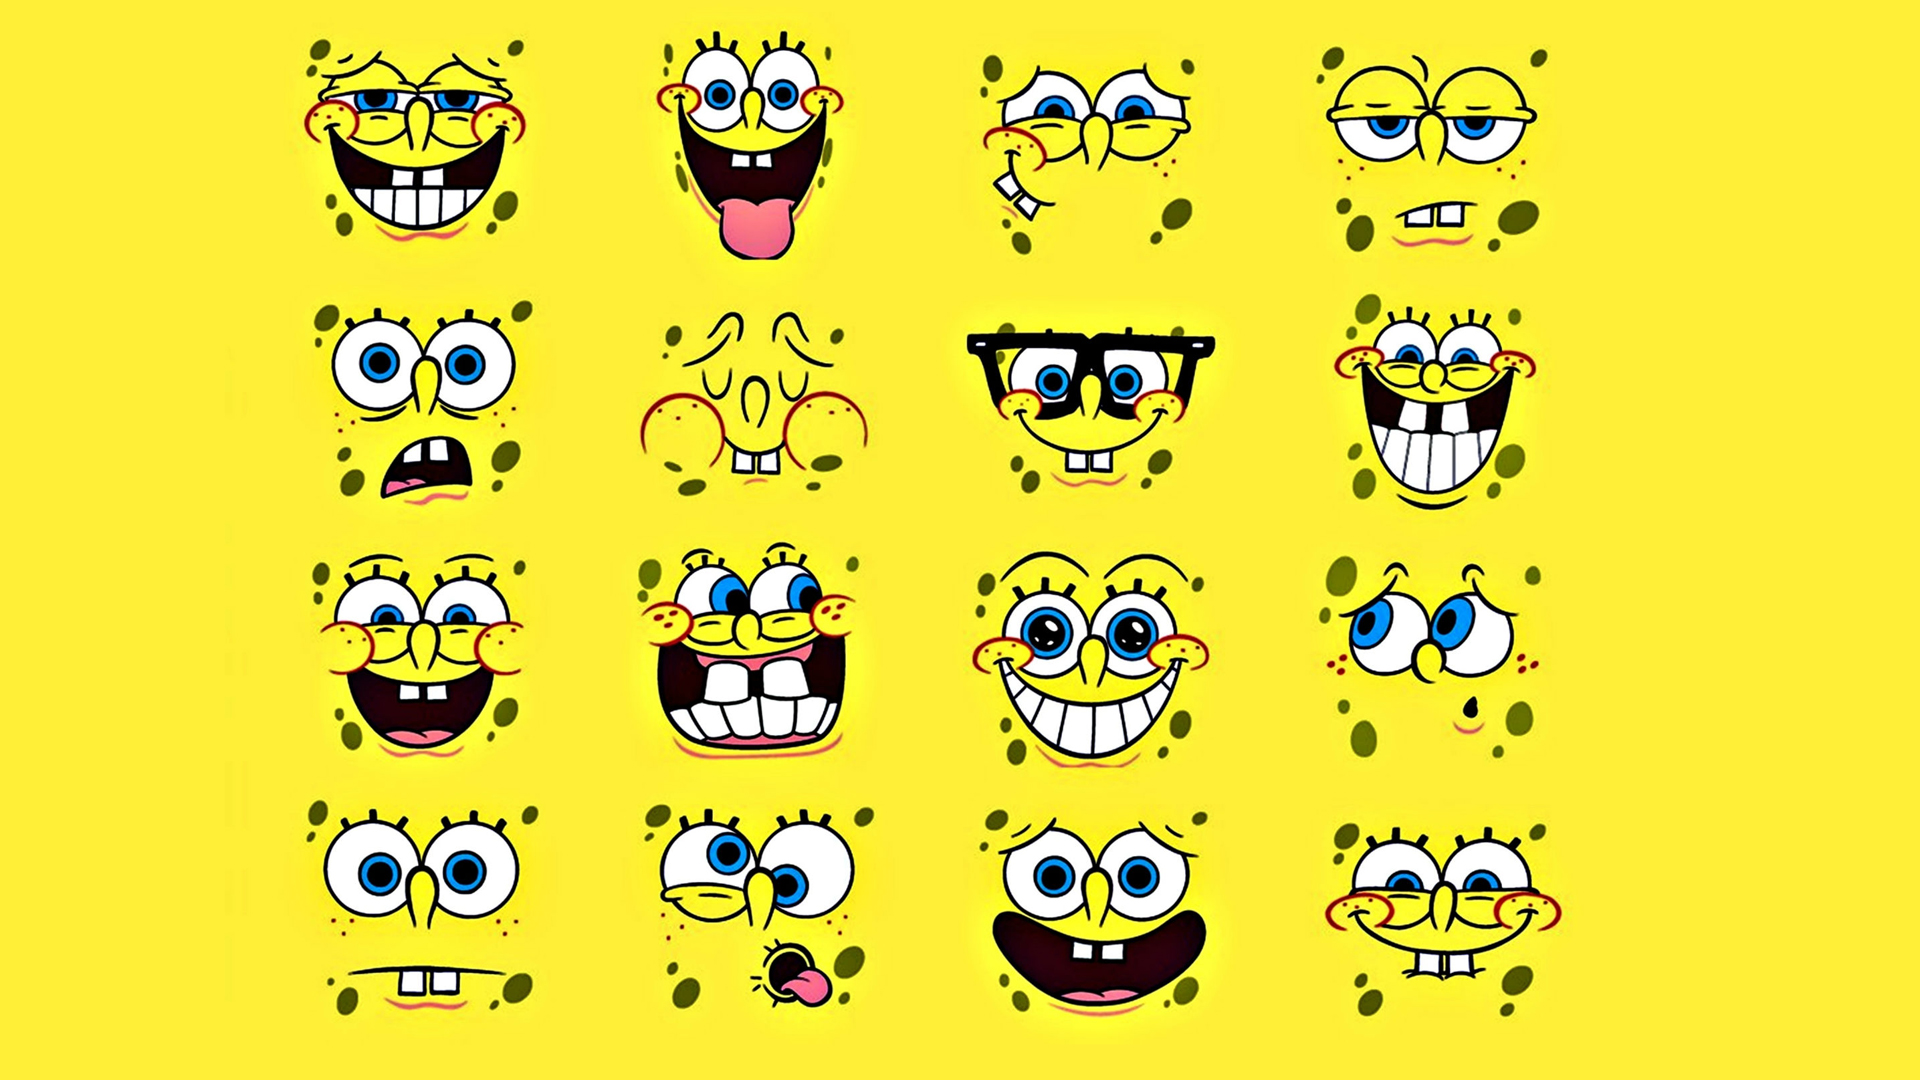 HD X Spongebob Wallpaper Image And Choose Set As Background